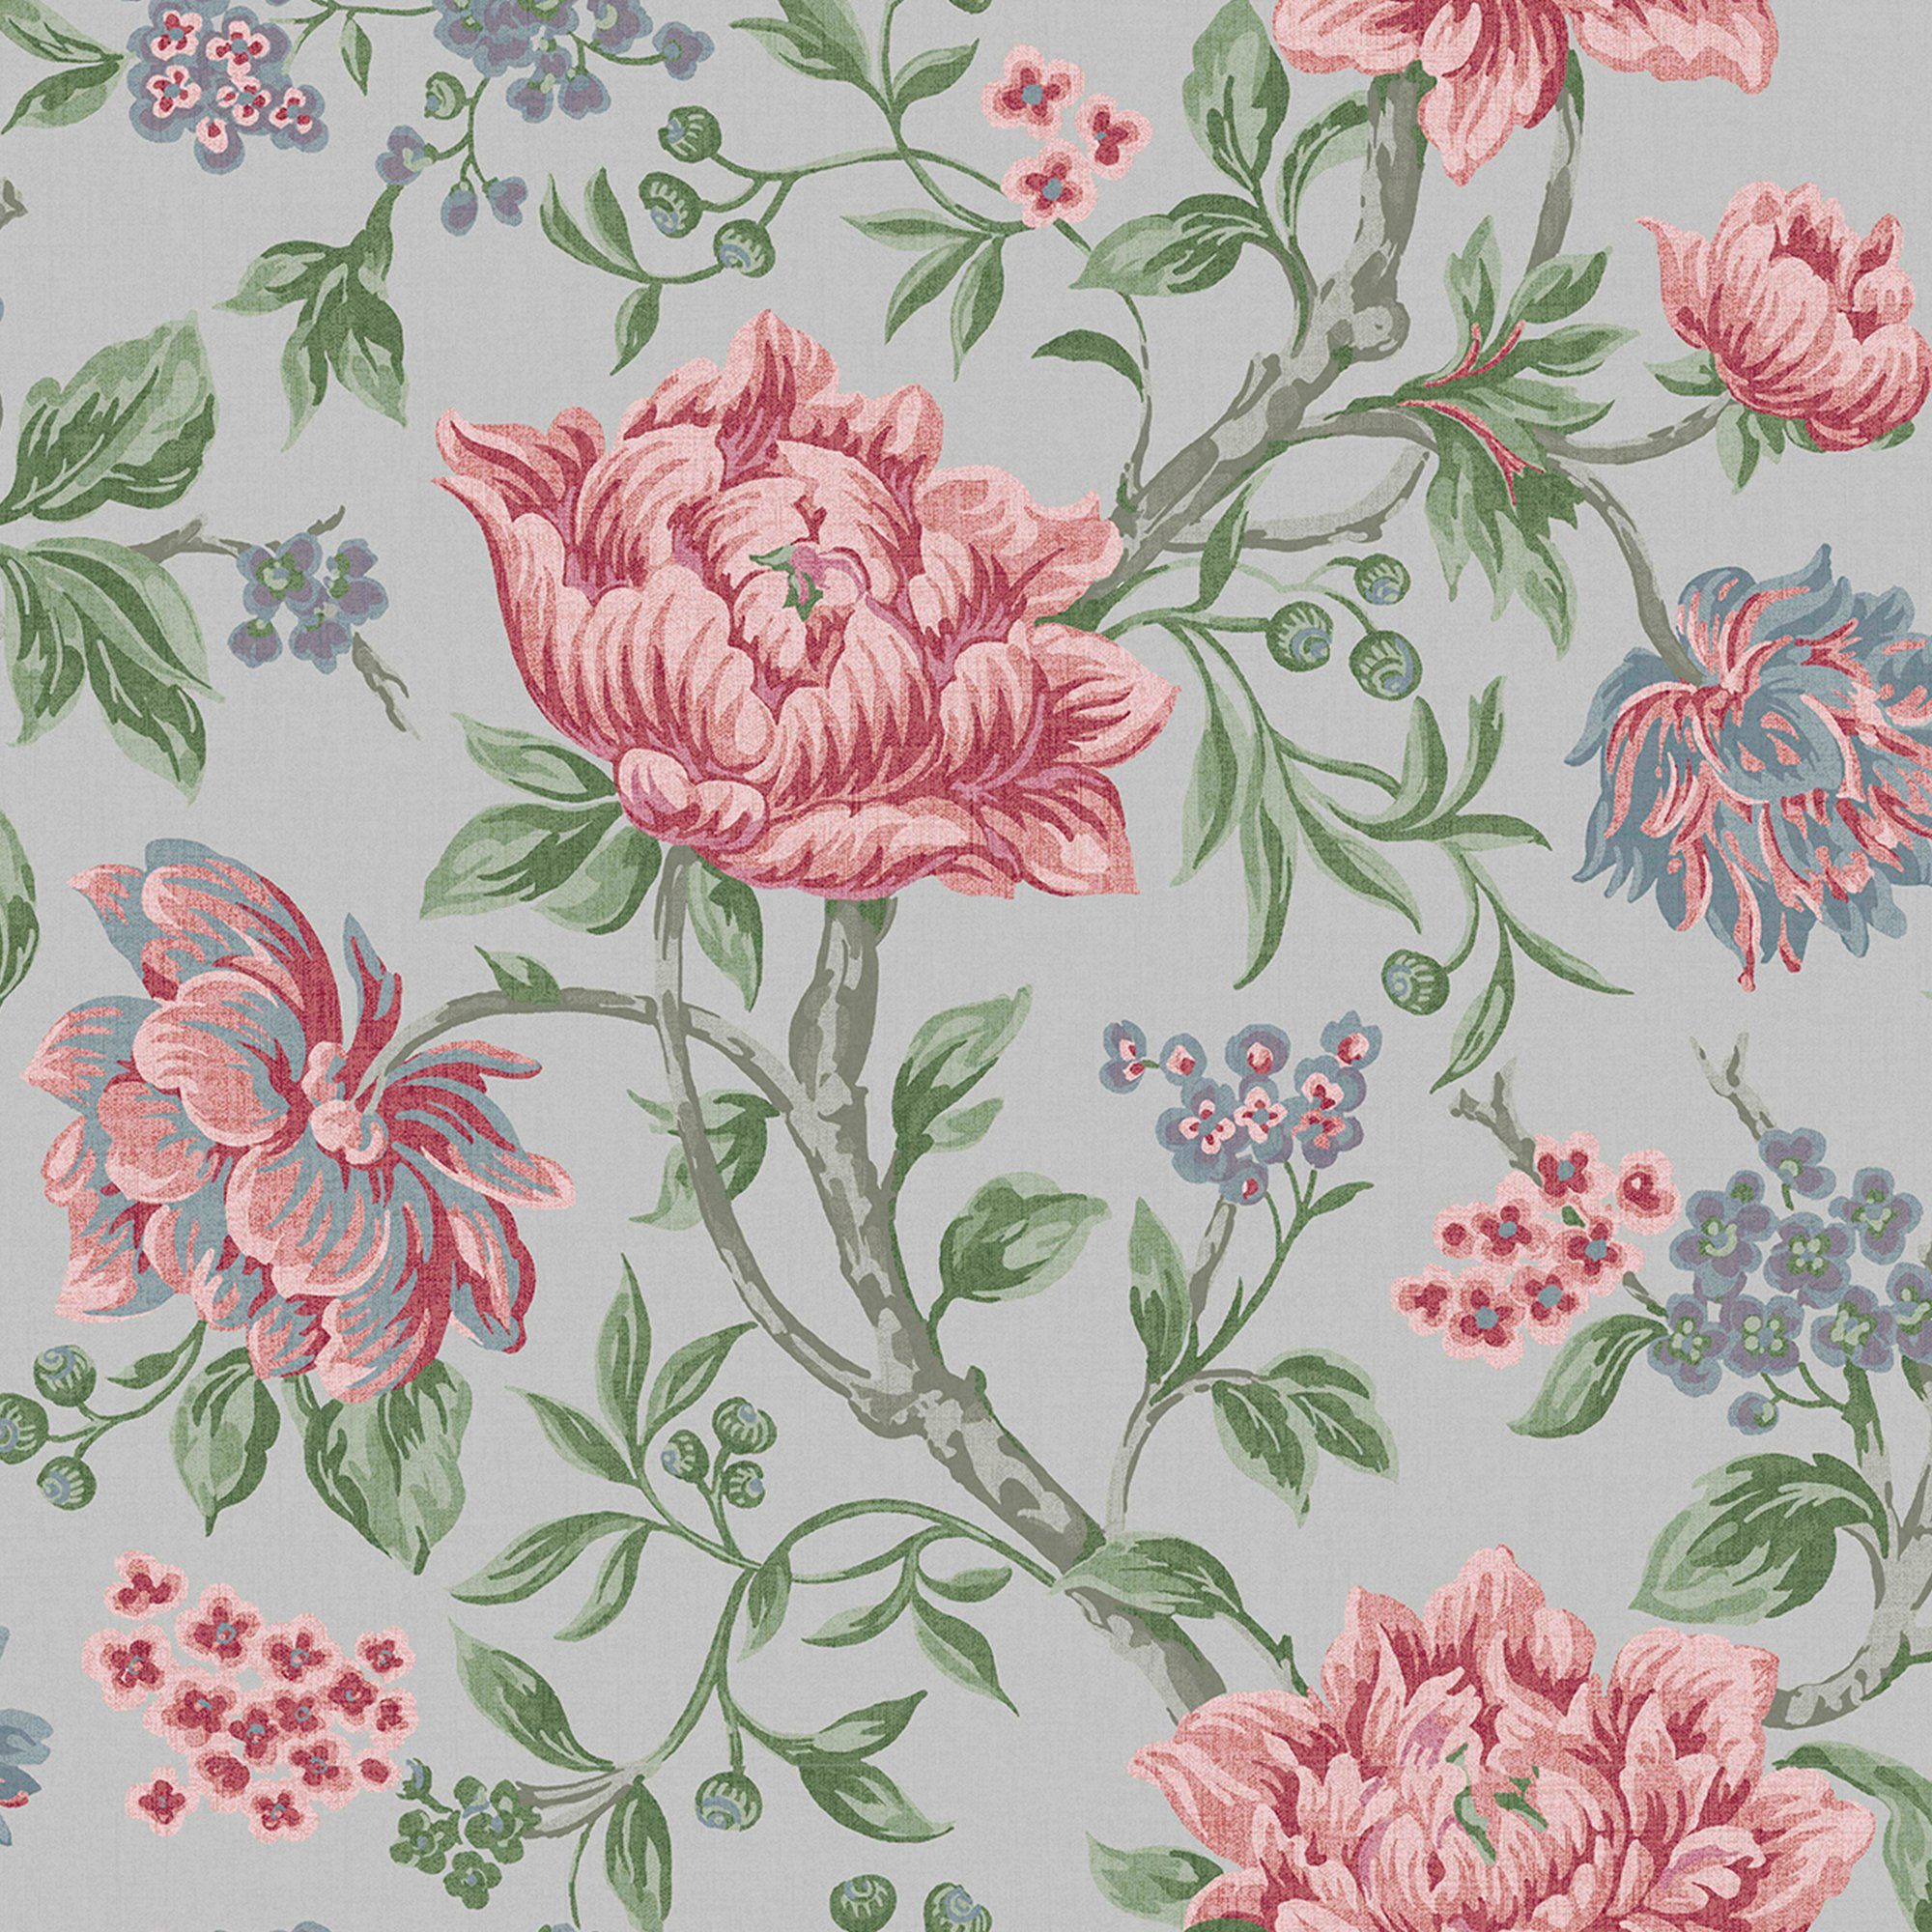 LAURA ASHLEY Vliestapete Tapestry Floral, FSC® zertifiziert, mit lebhaftem Druck, 10 Meter Länge grau